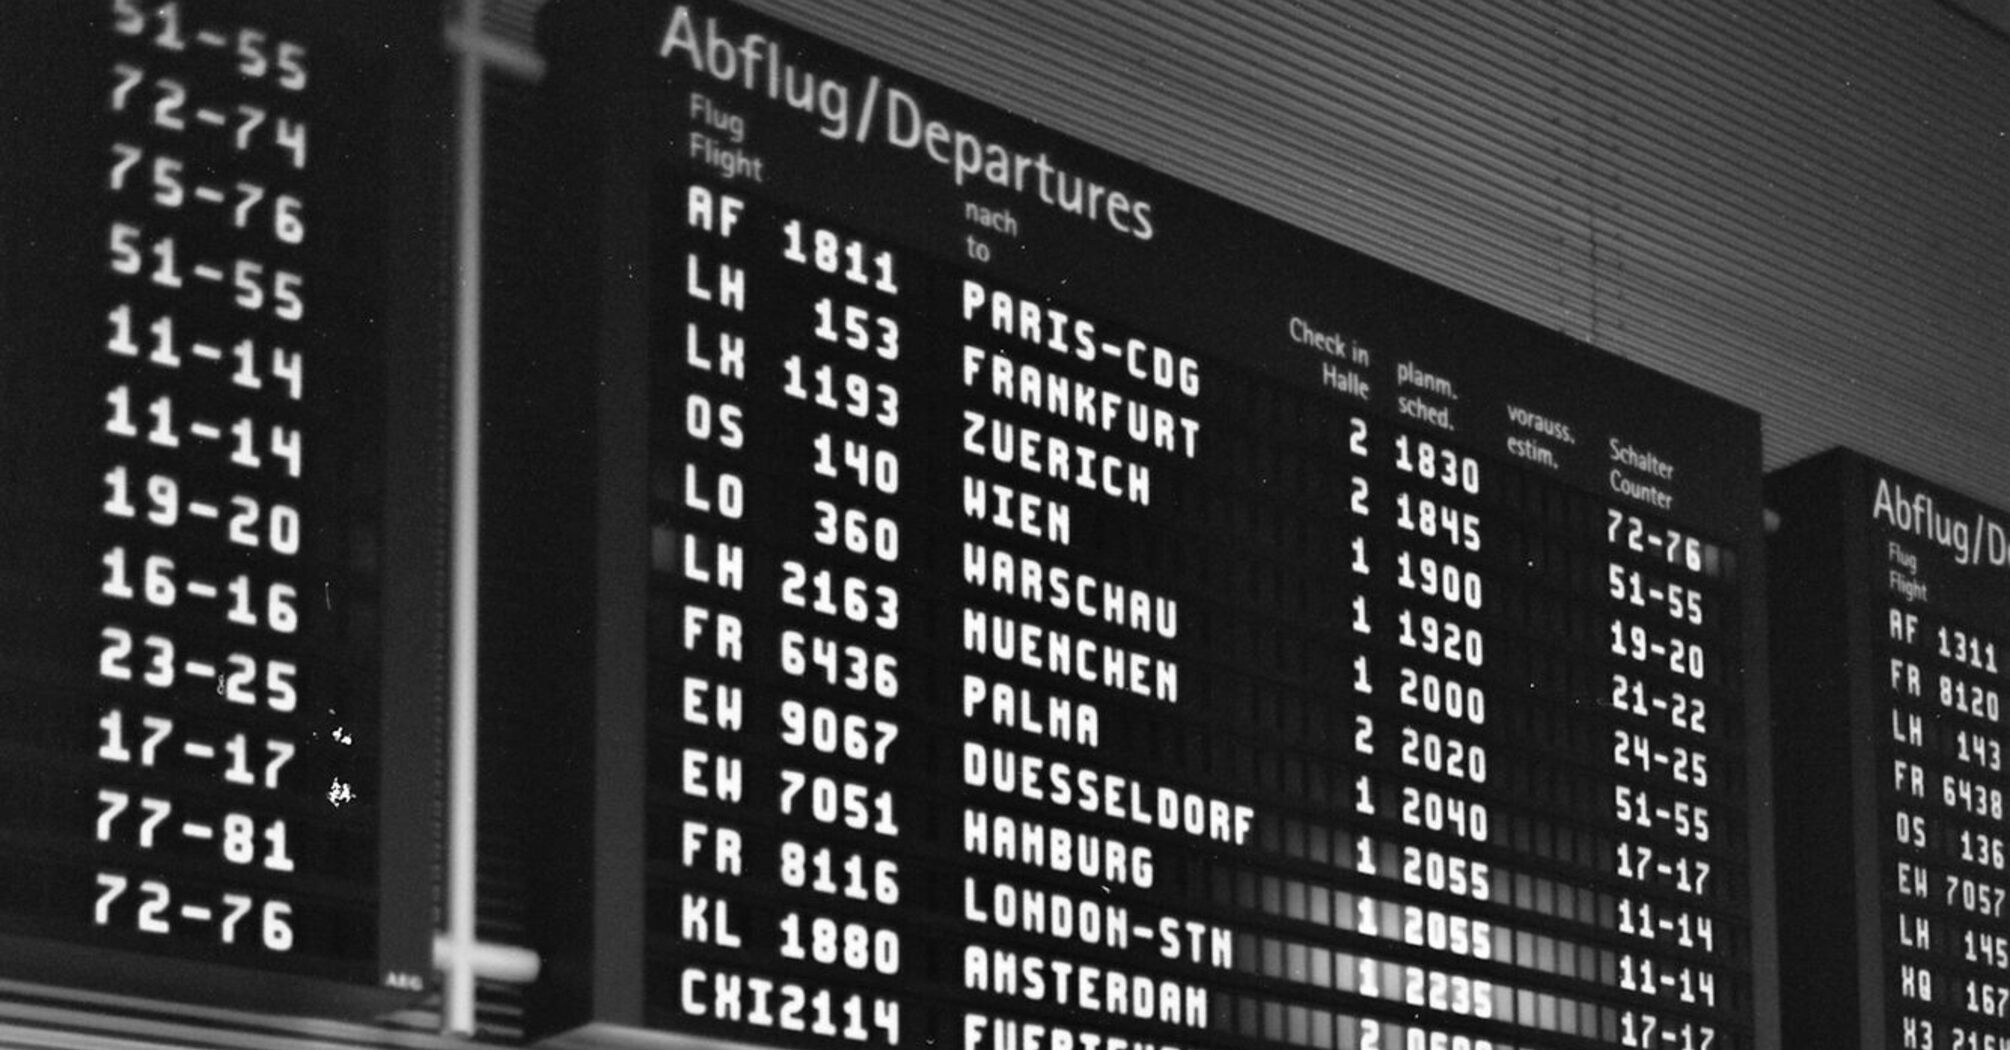 Split-Flap Airport Displays